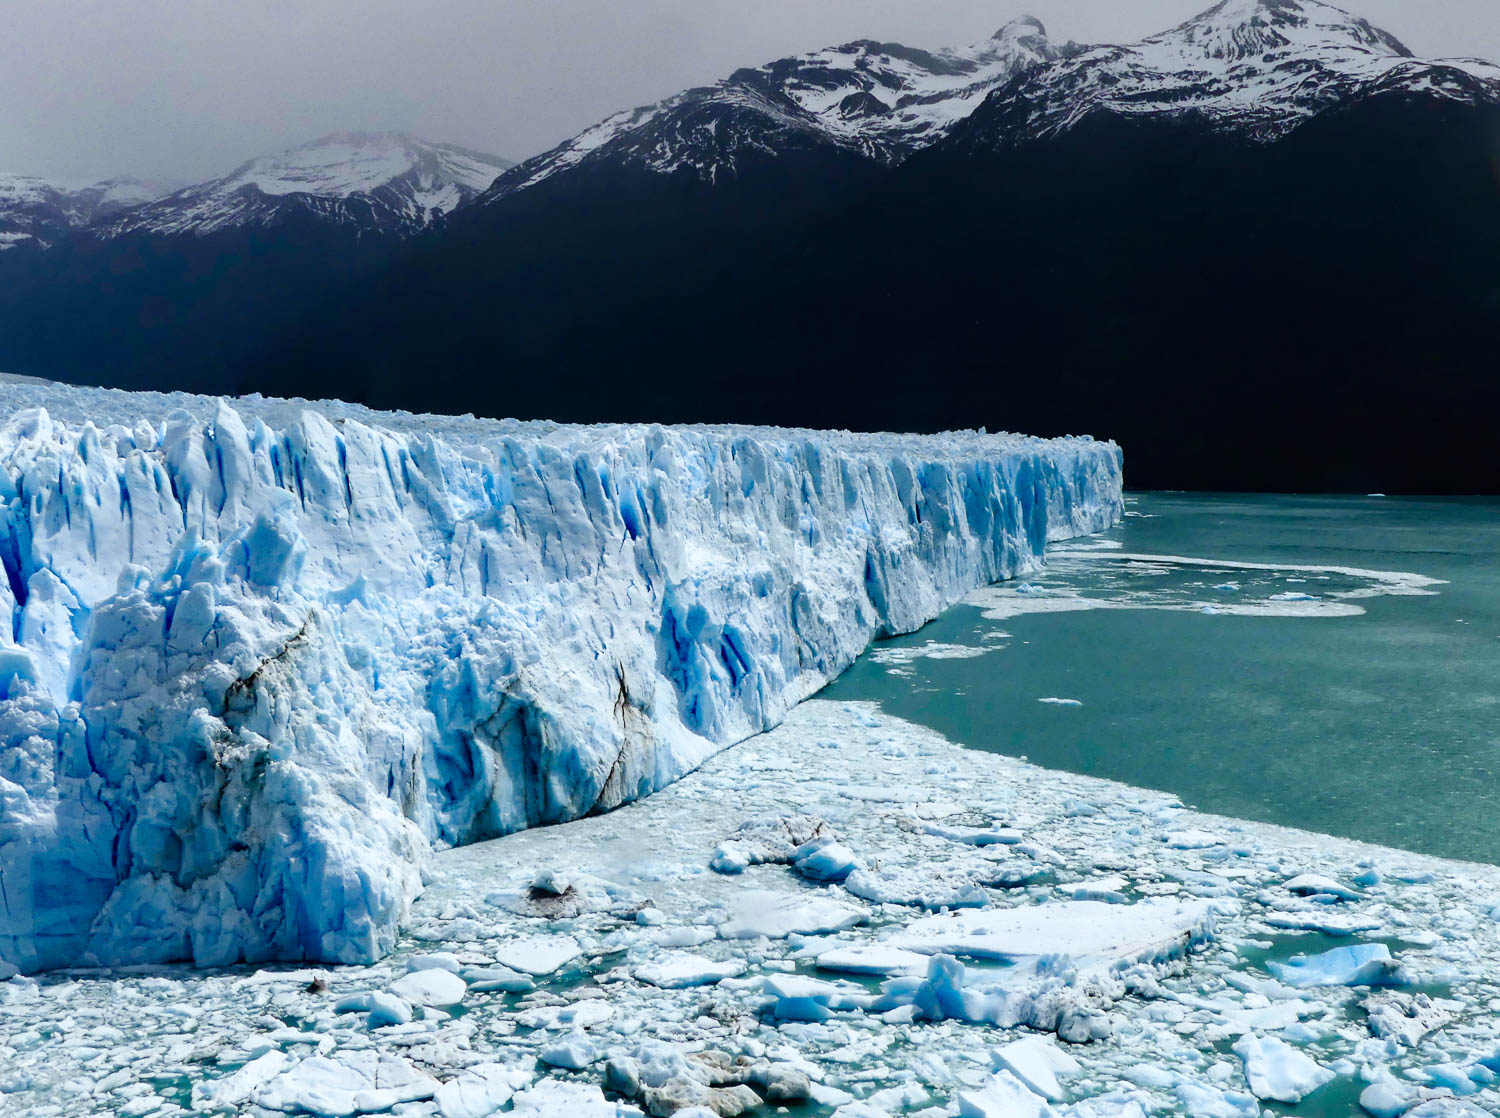 ePostcard #142: Patagonian Glaciation